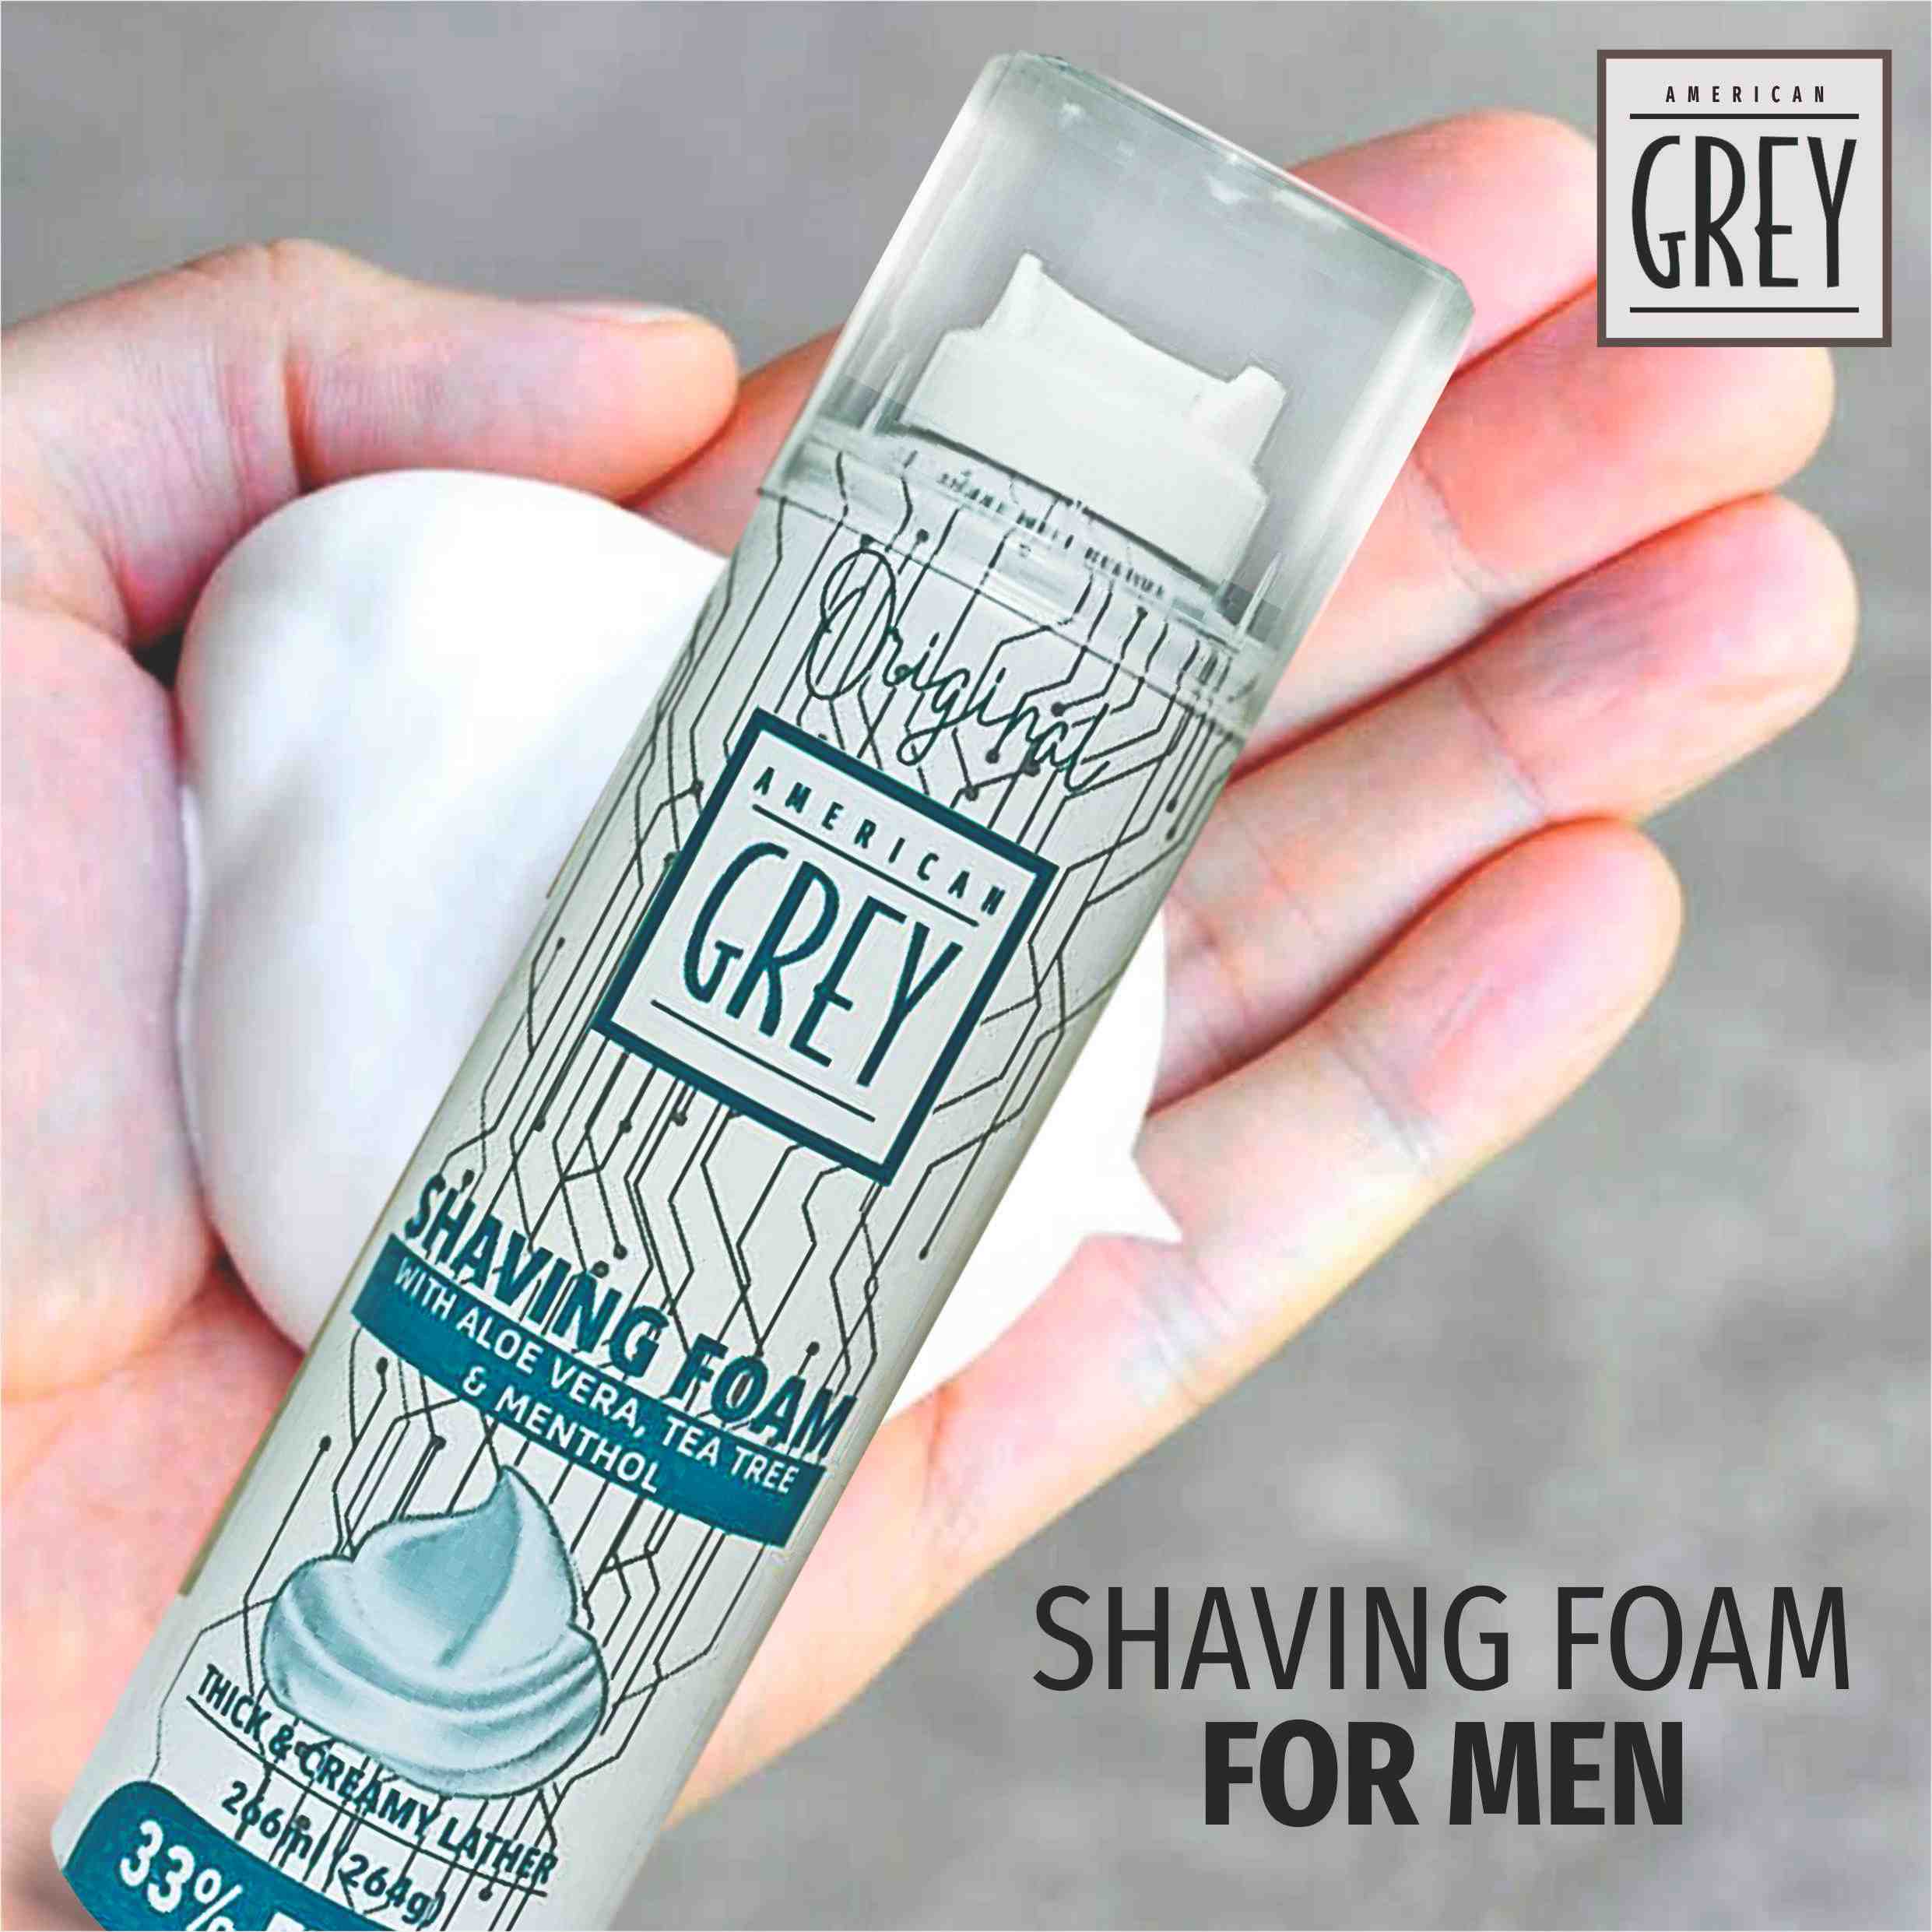 best shaving foam for men- american grey